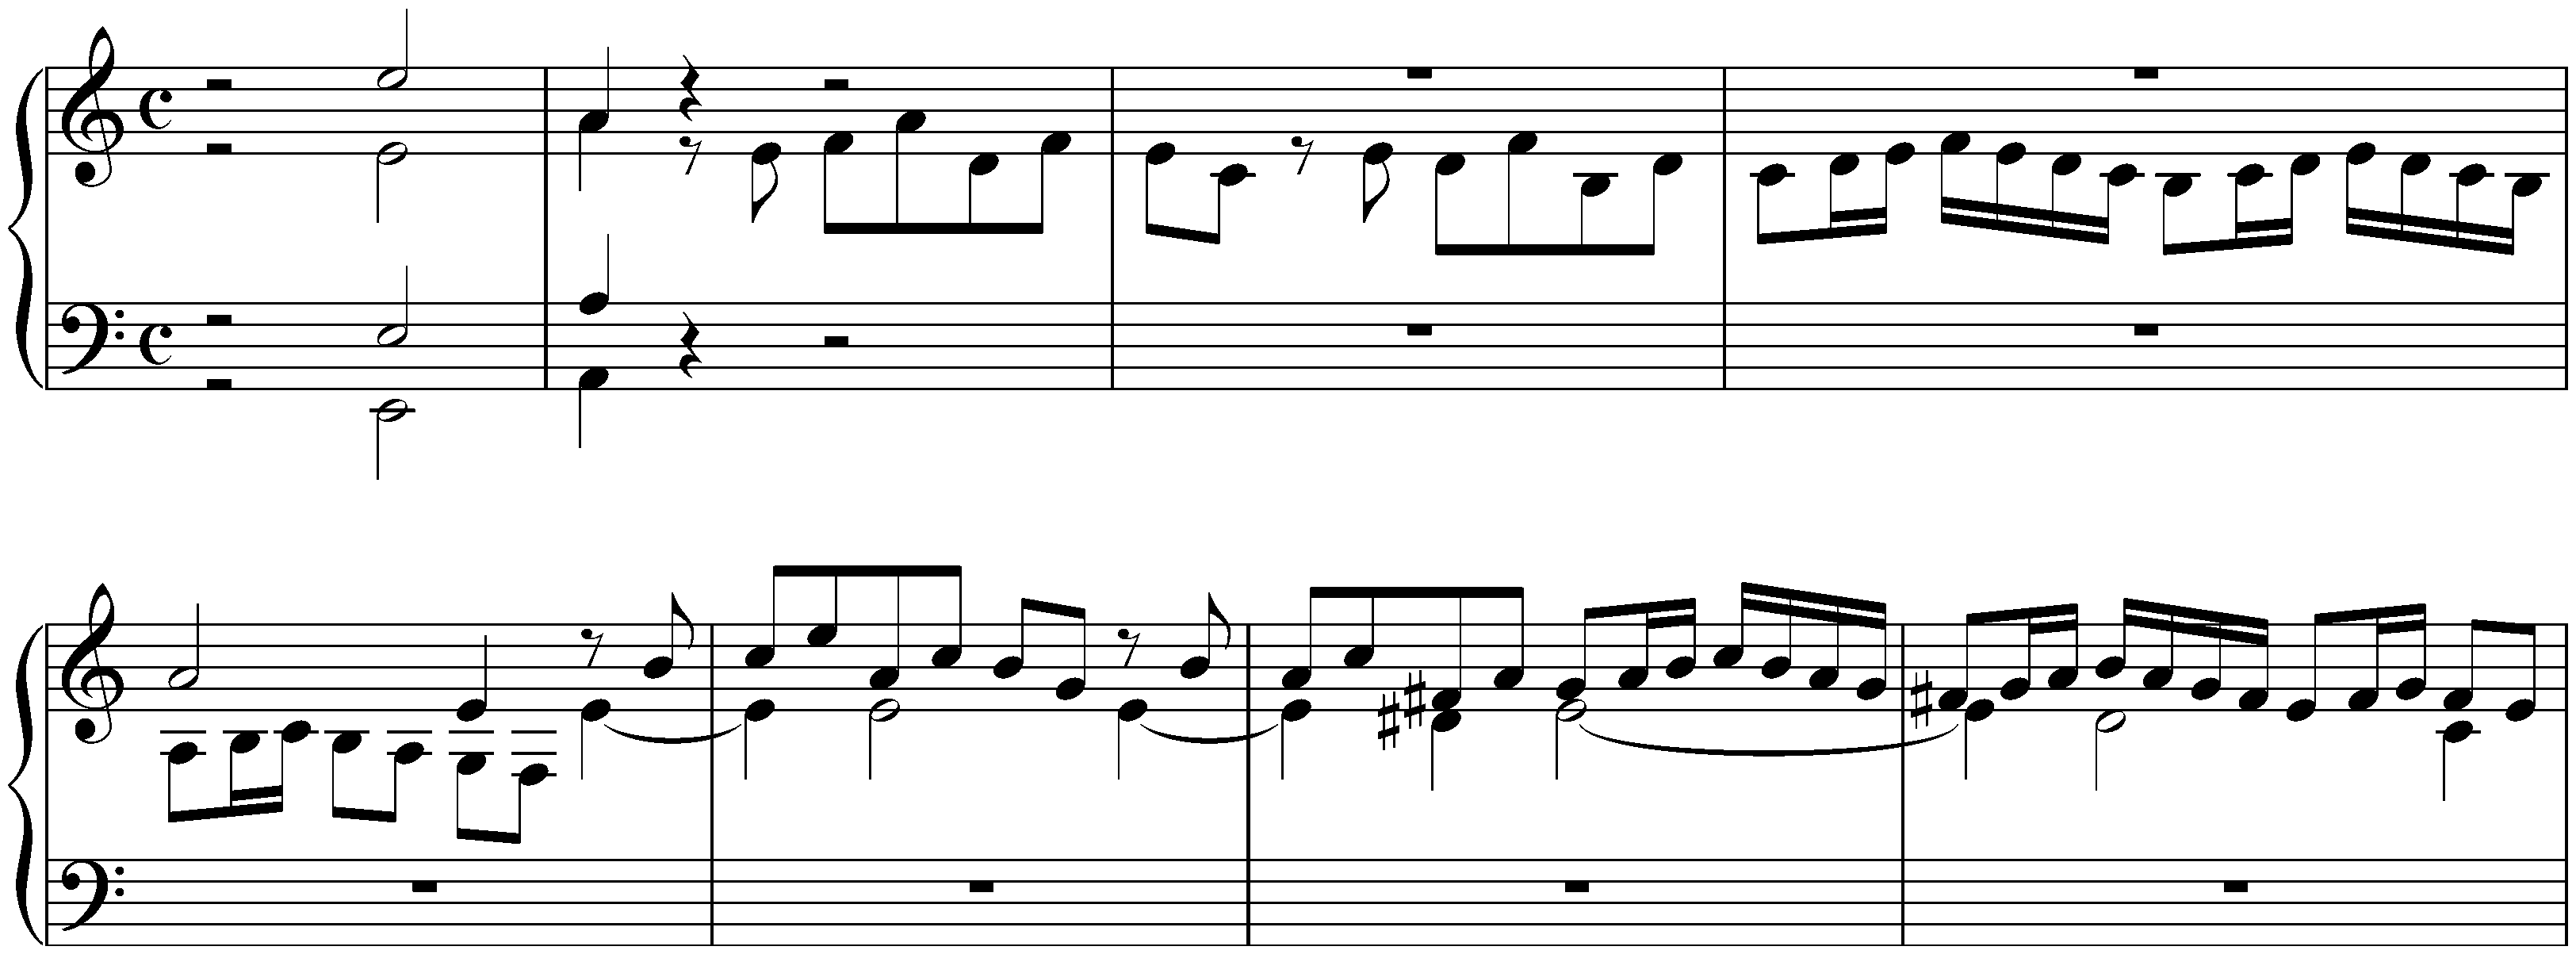 Fugue in A minor, BWV 897/2